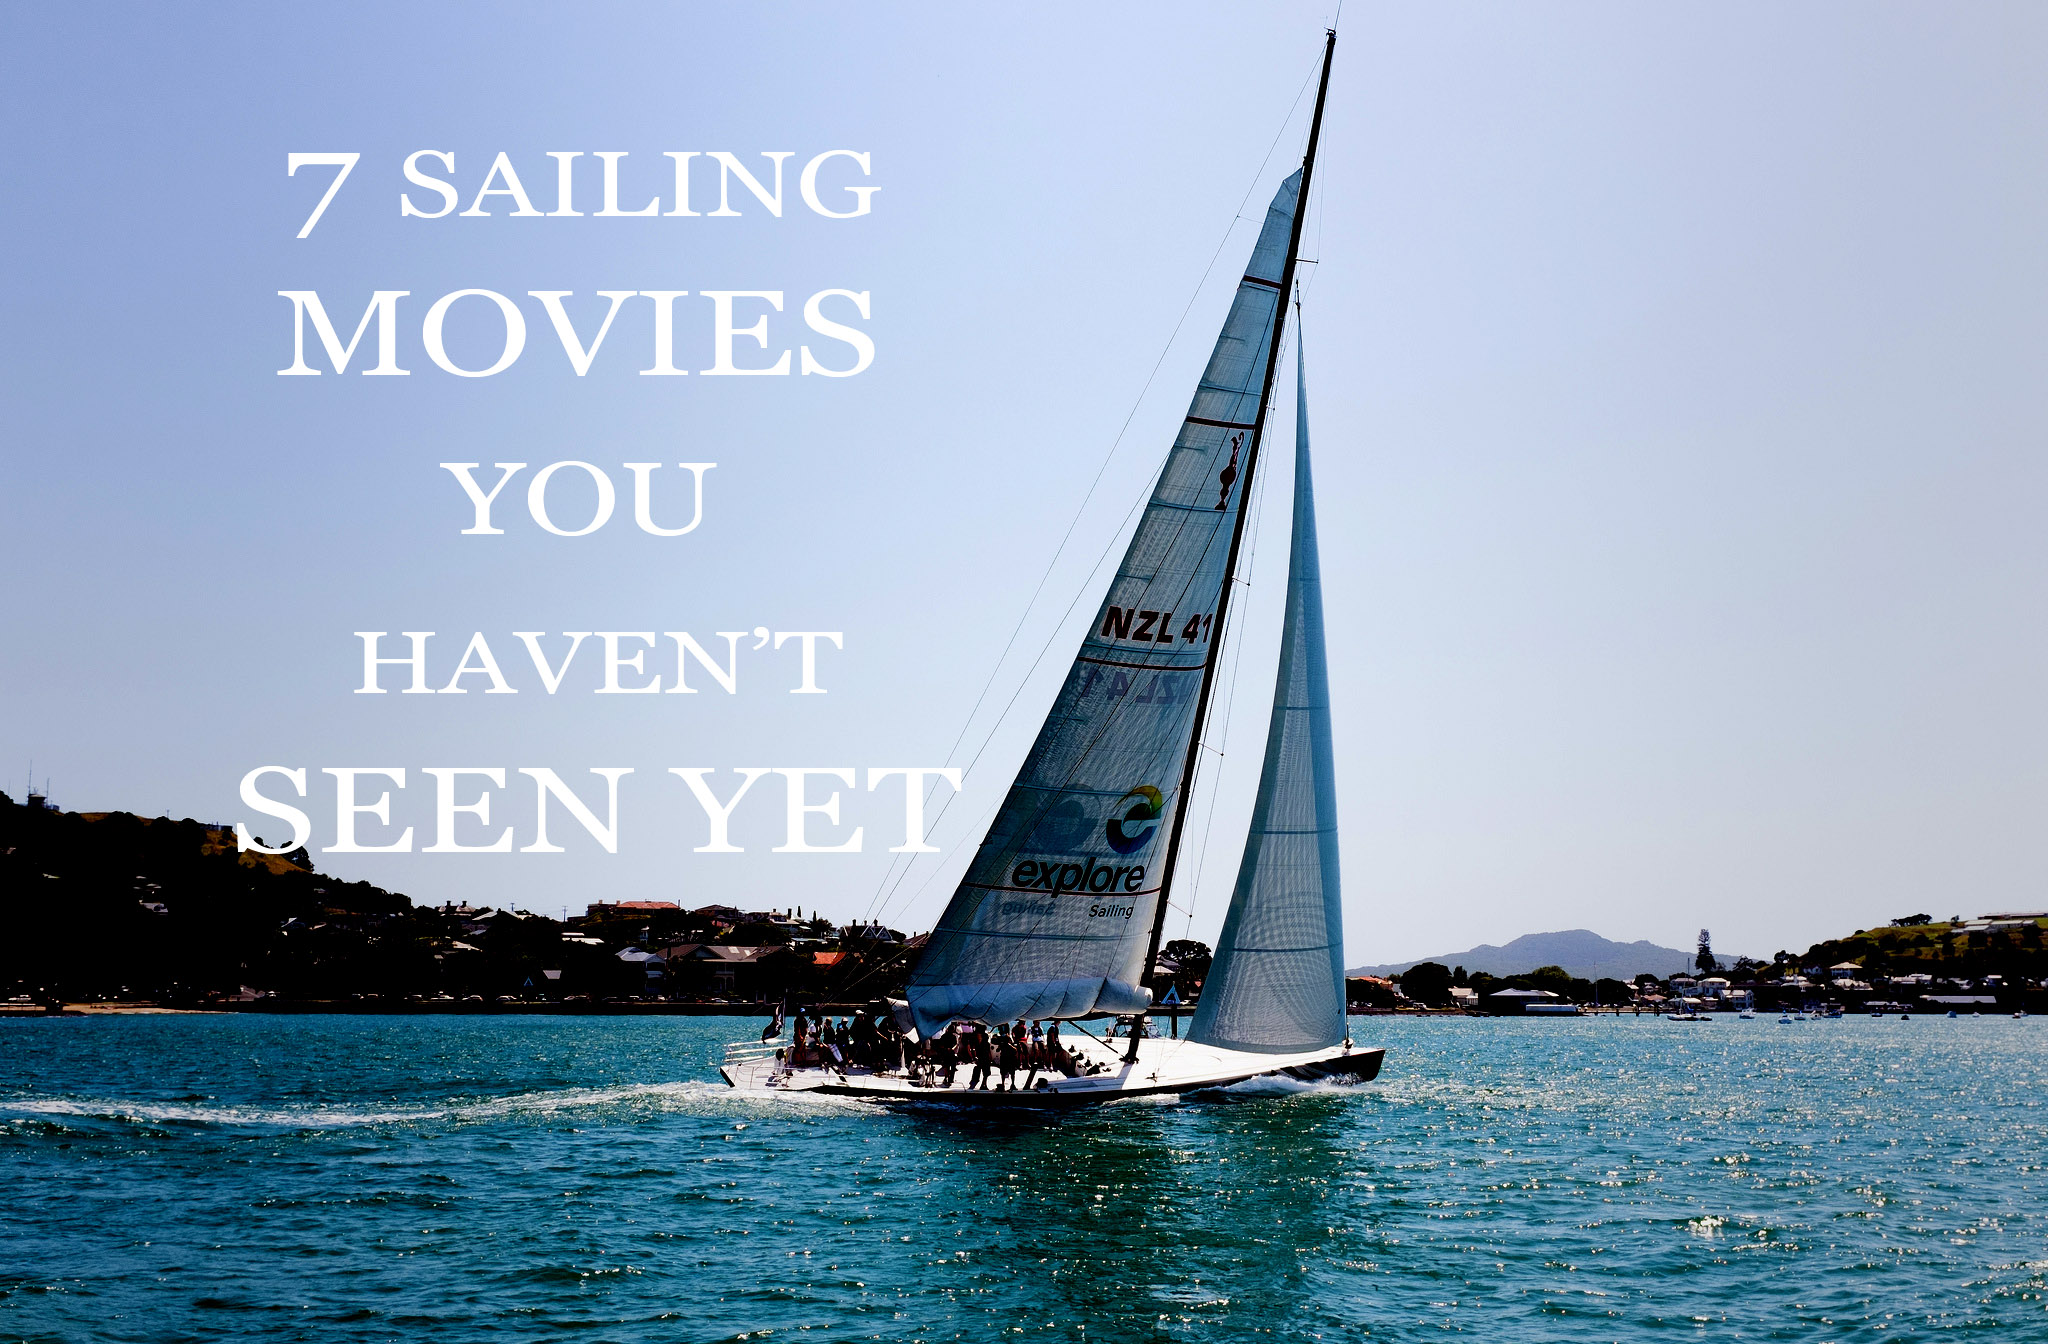 sailboat racing movie